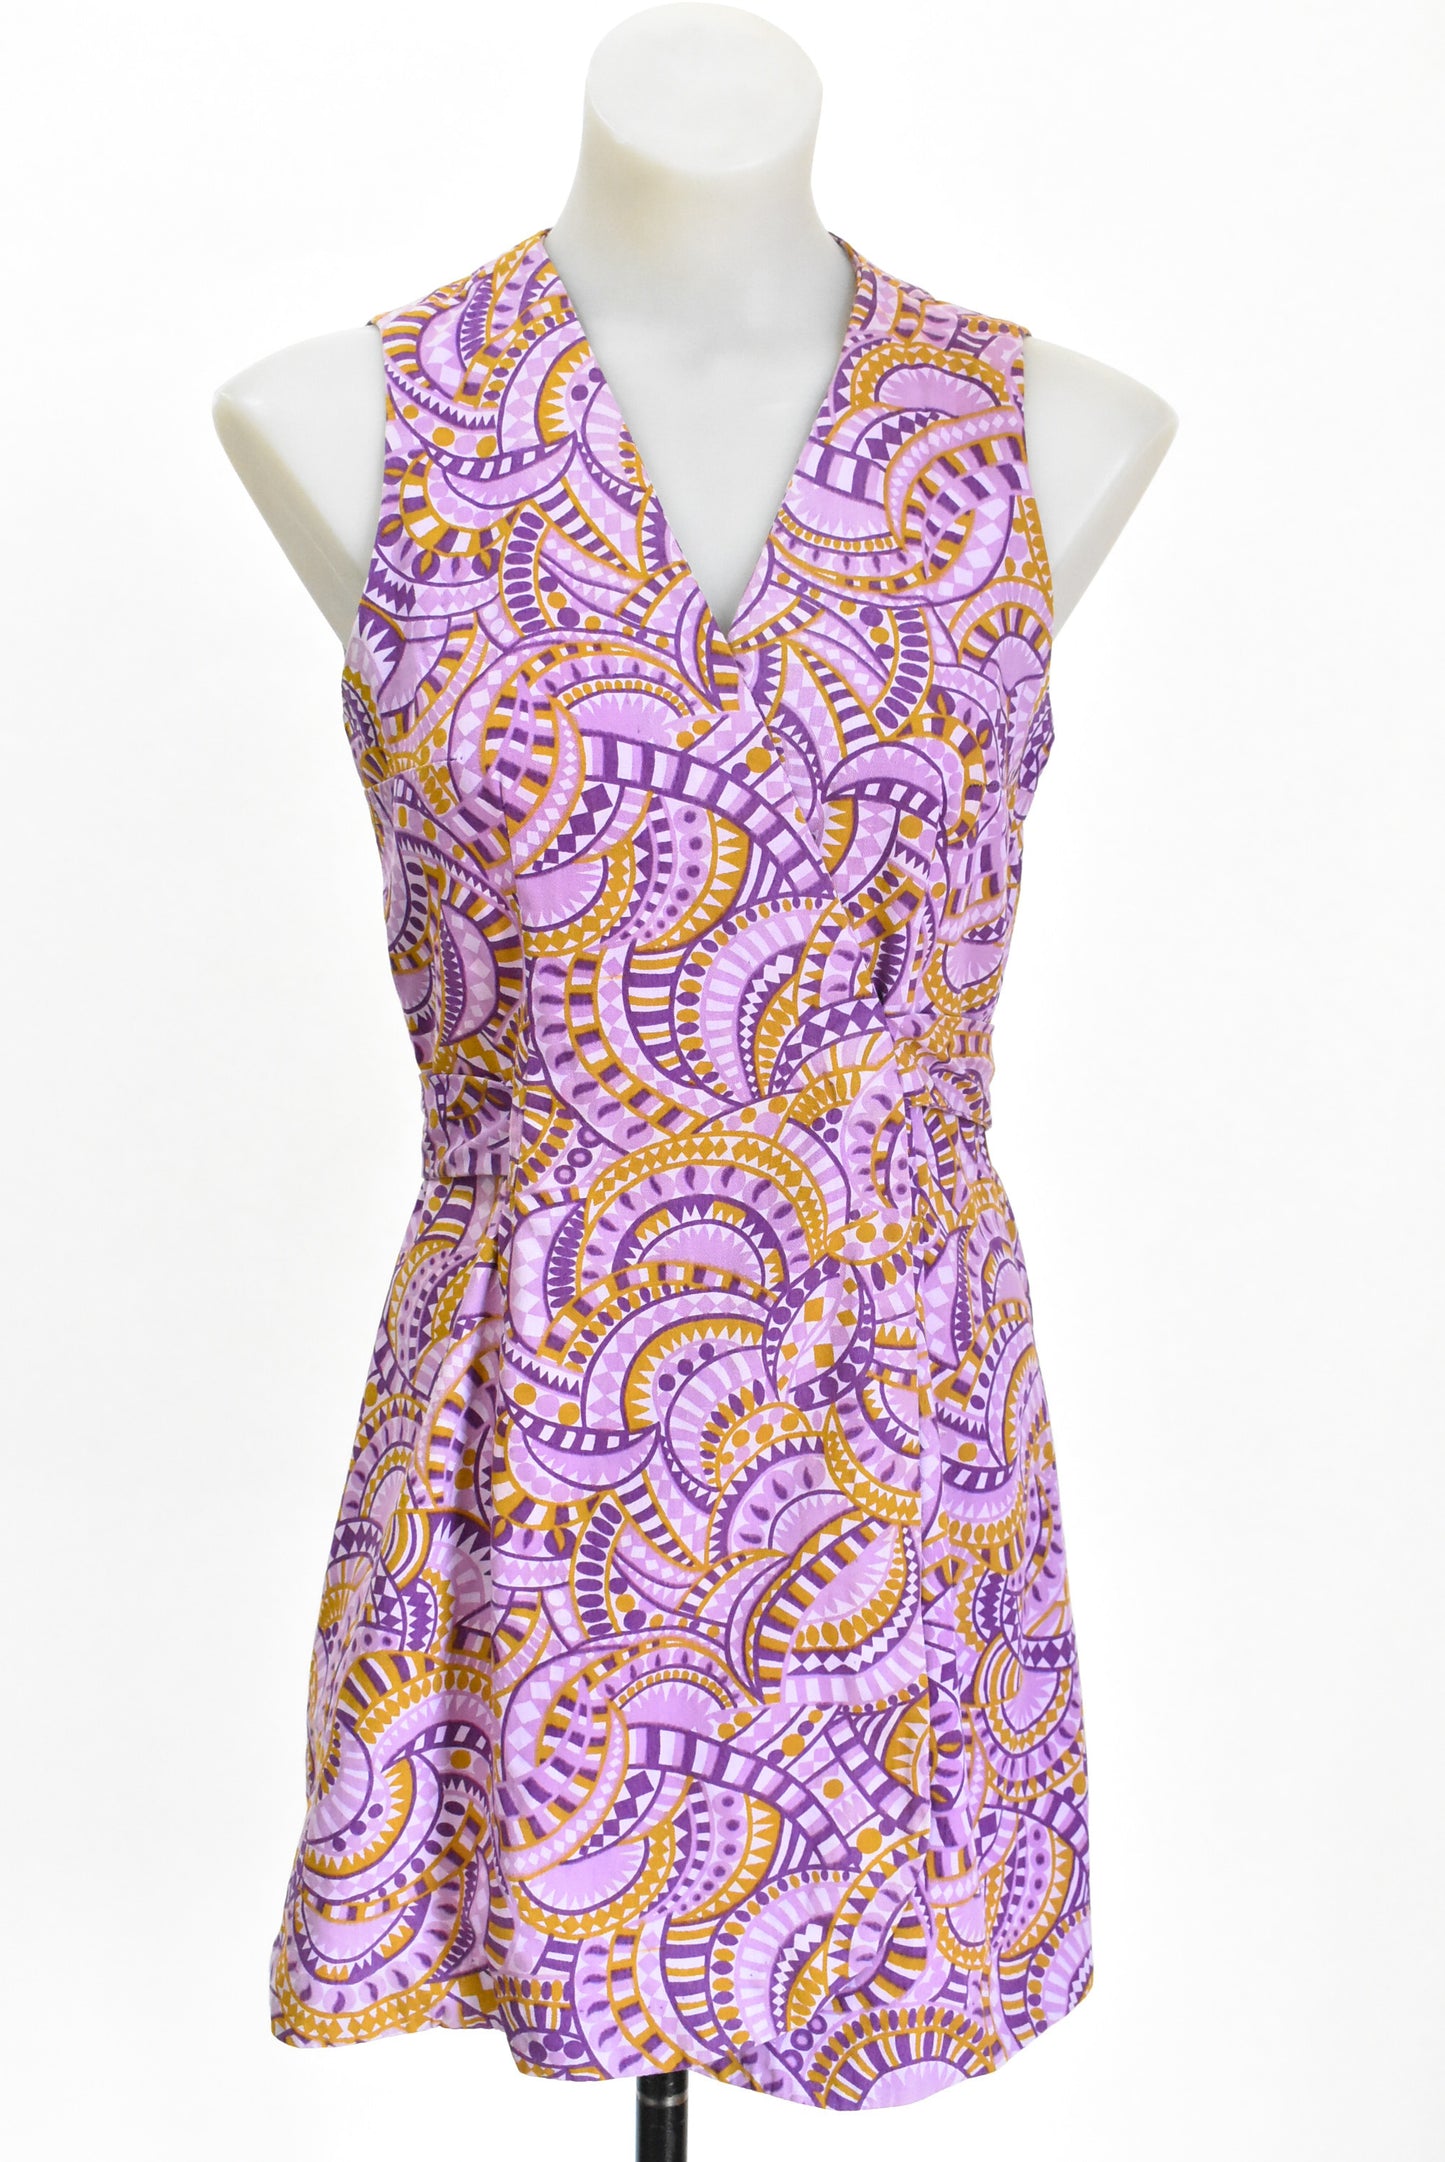 Retro purple and gold wrap around dress/top, M